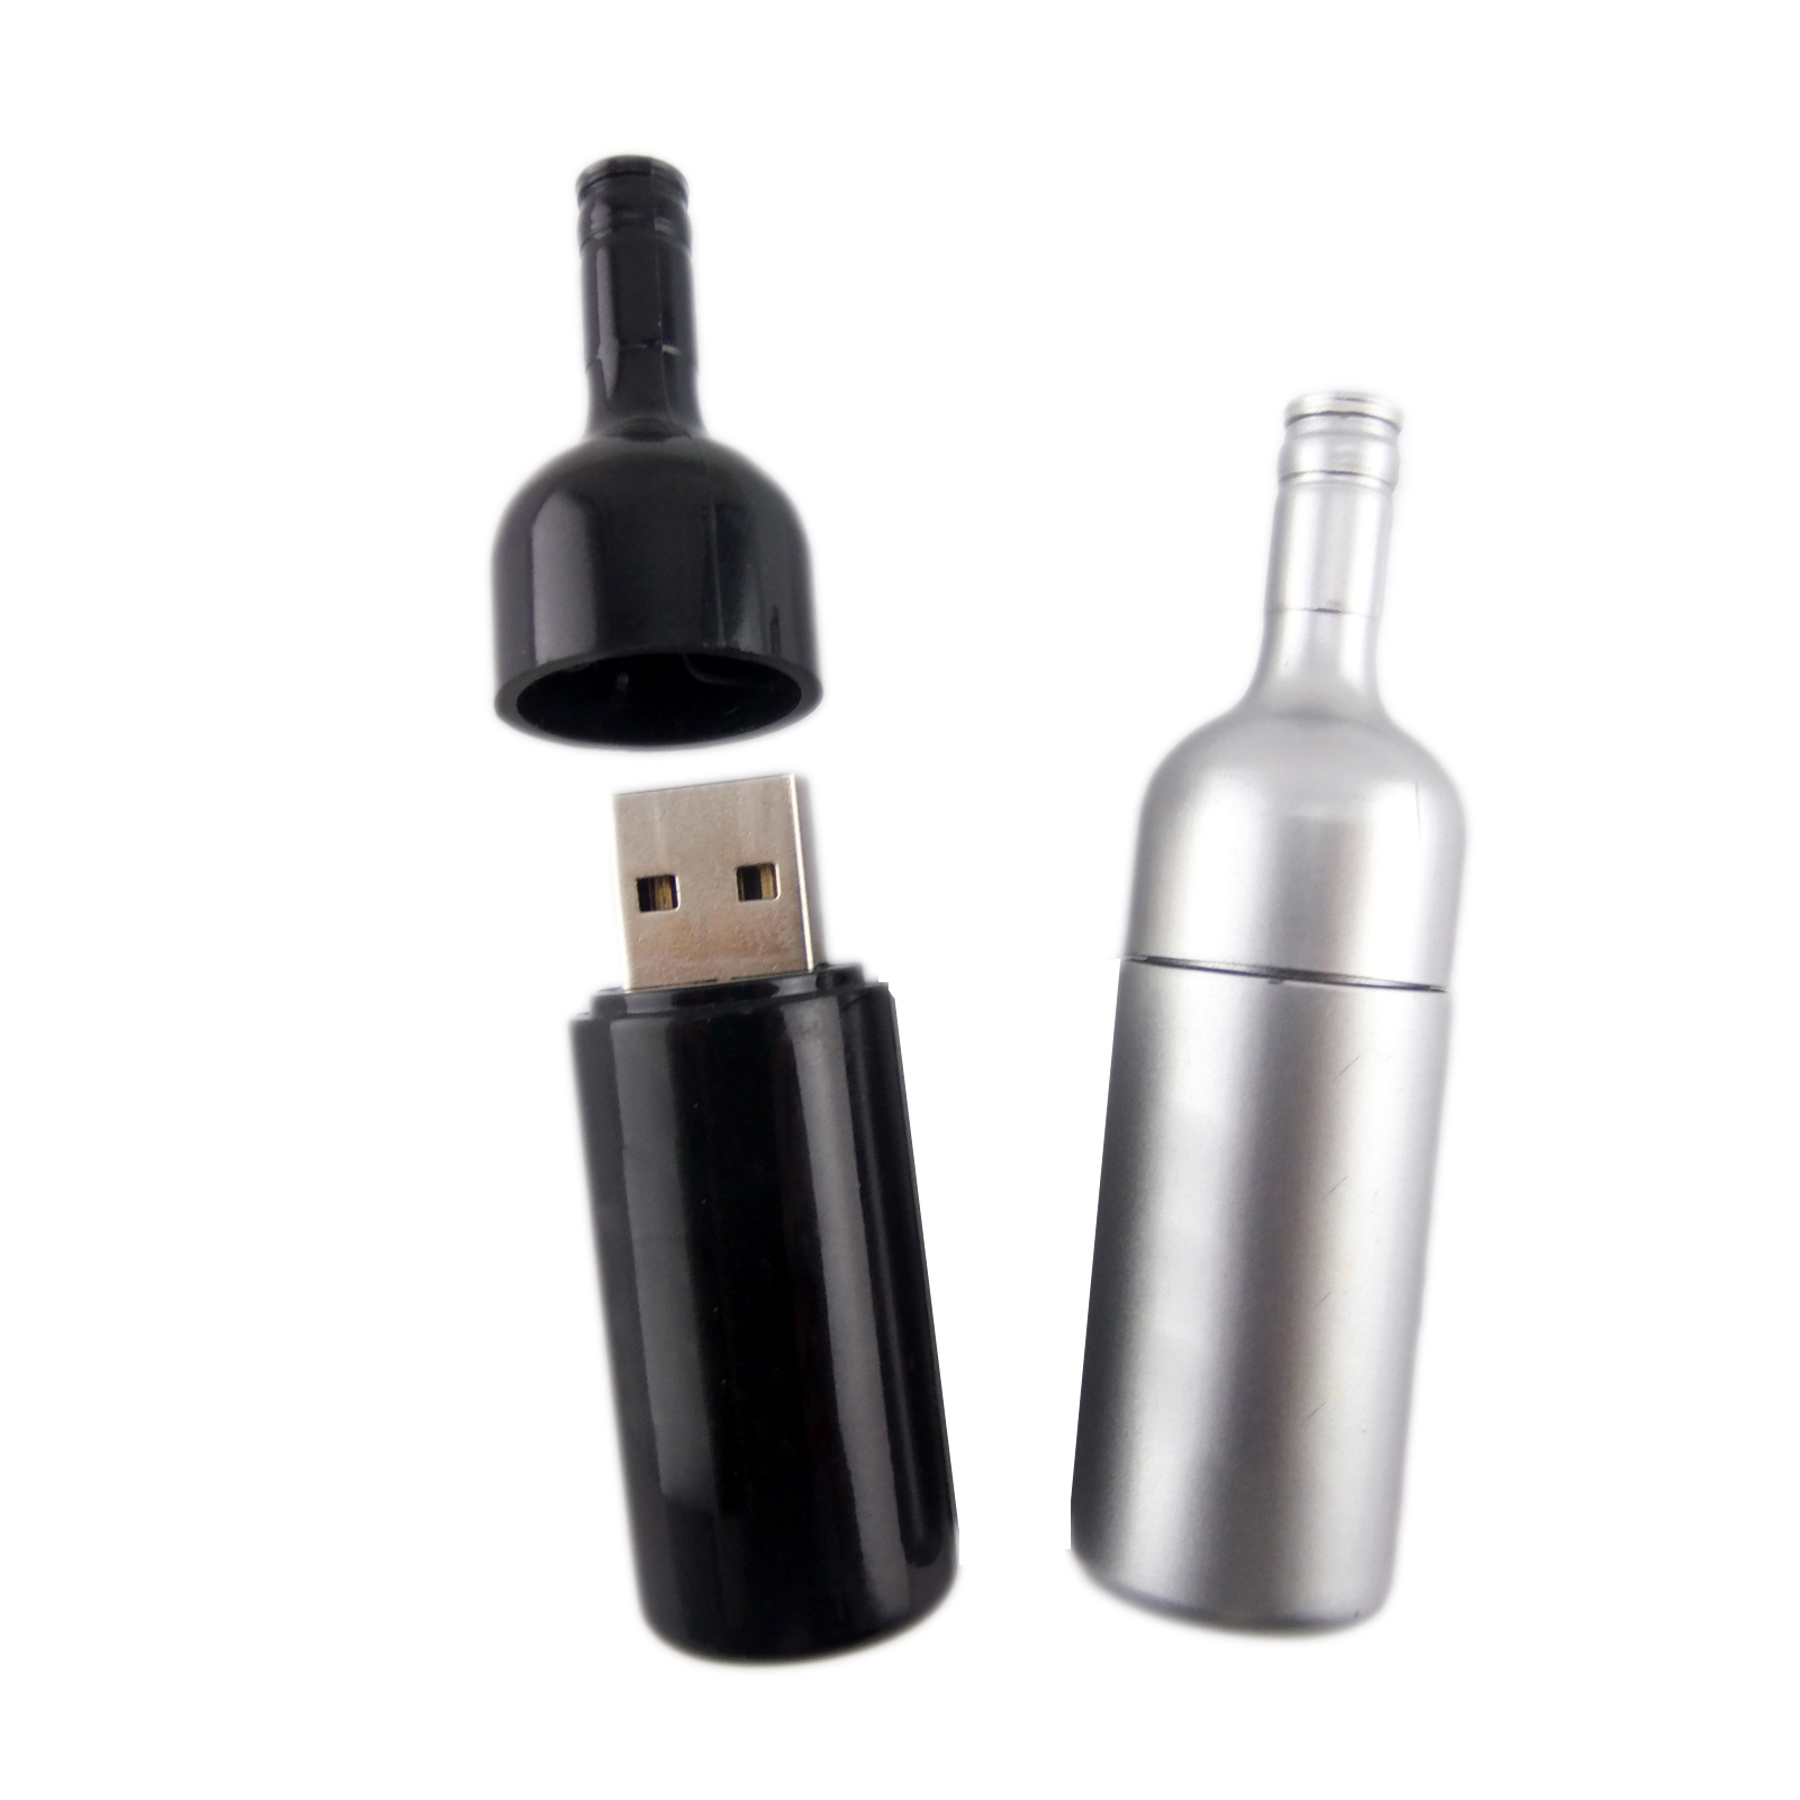 Bottle Shaped USB Drive